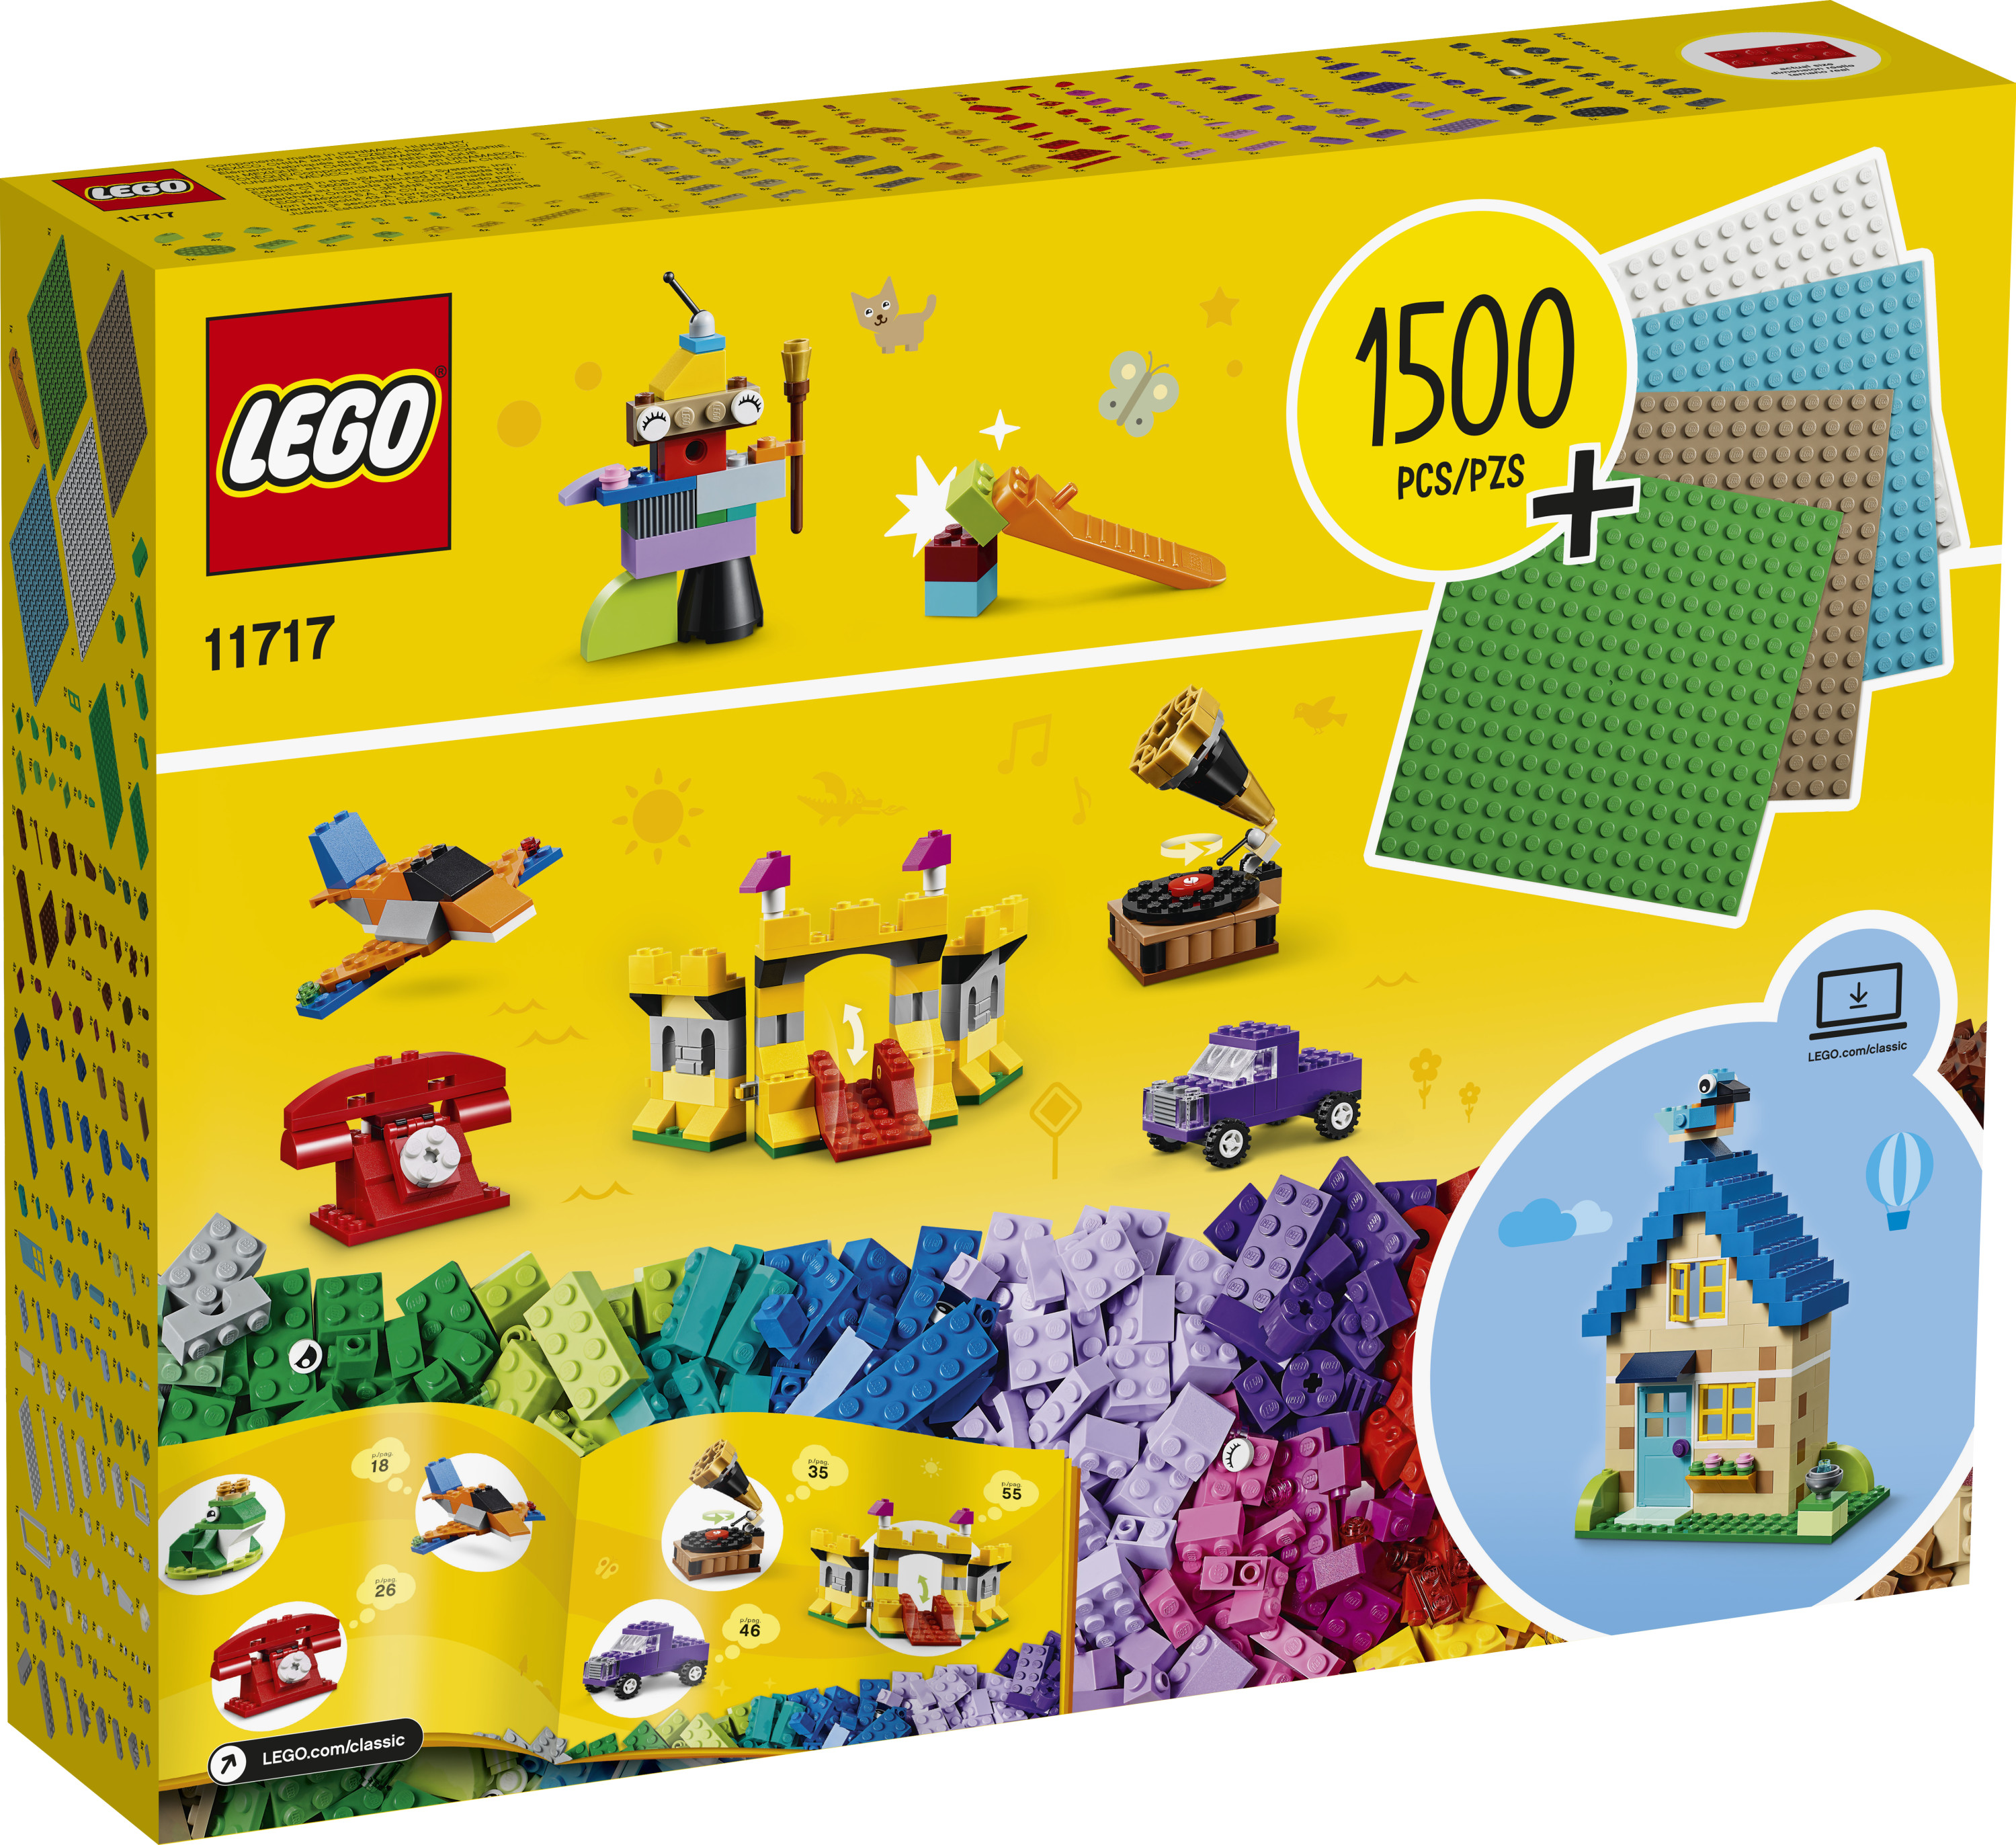 lego classic 10717 bricks bricks bricks 1500 piece set